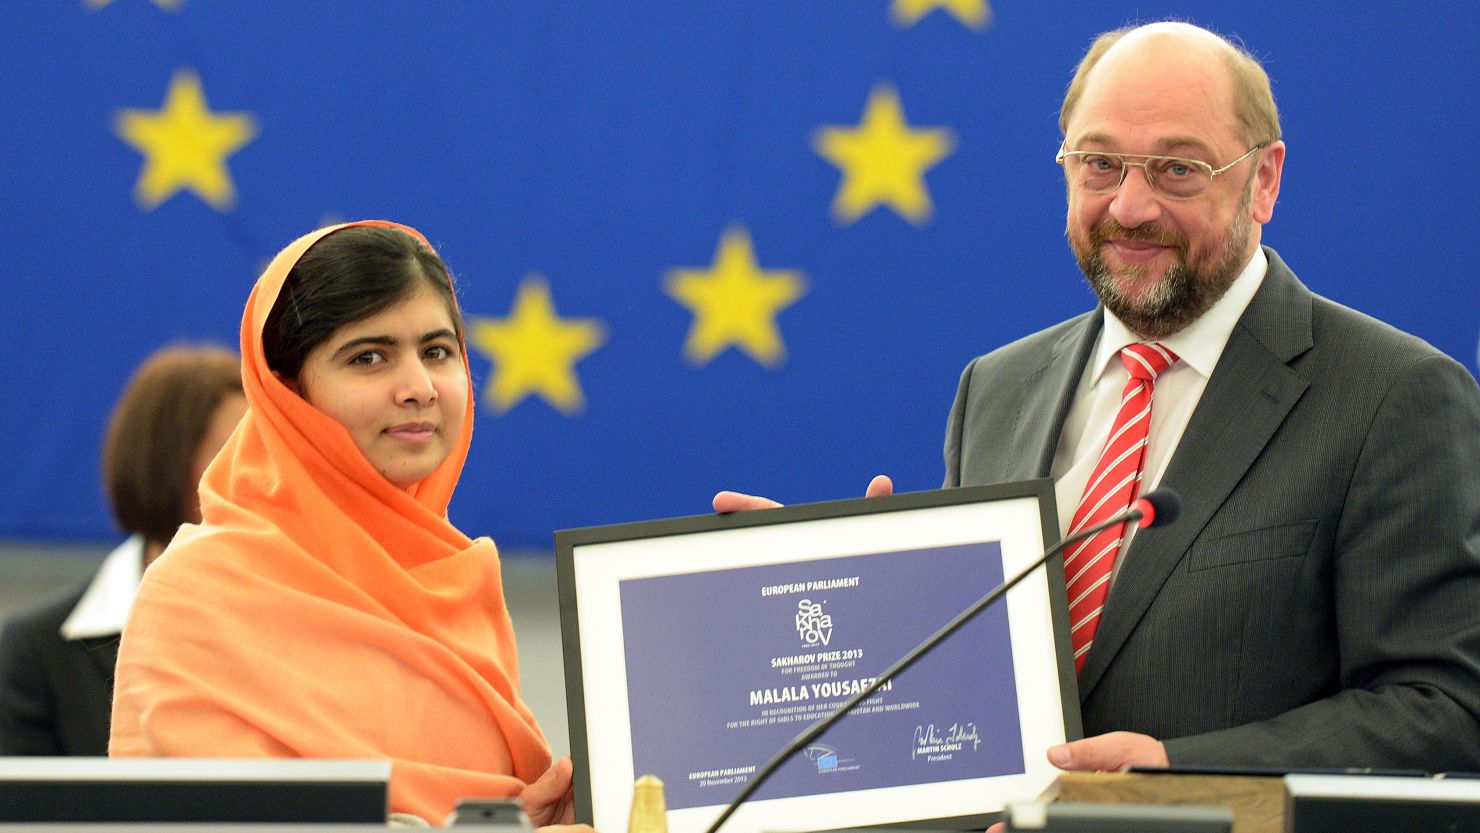 Malala Yousafzai with European Parliament president Martin Schulz, on November 20, 2013 in Strasbourg, France.